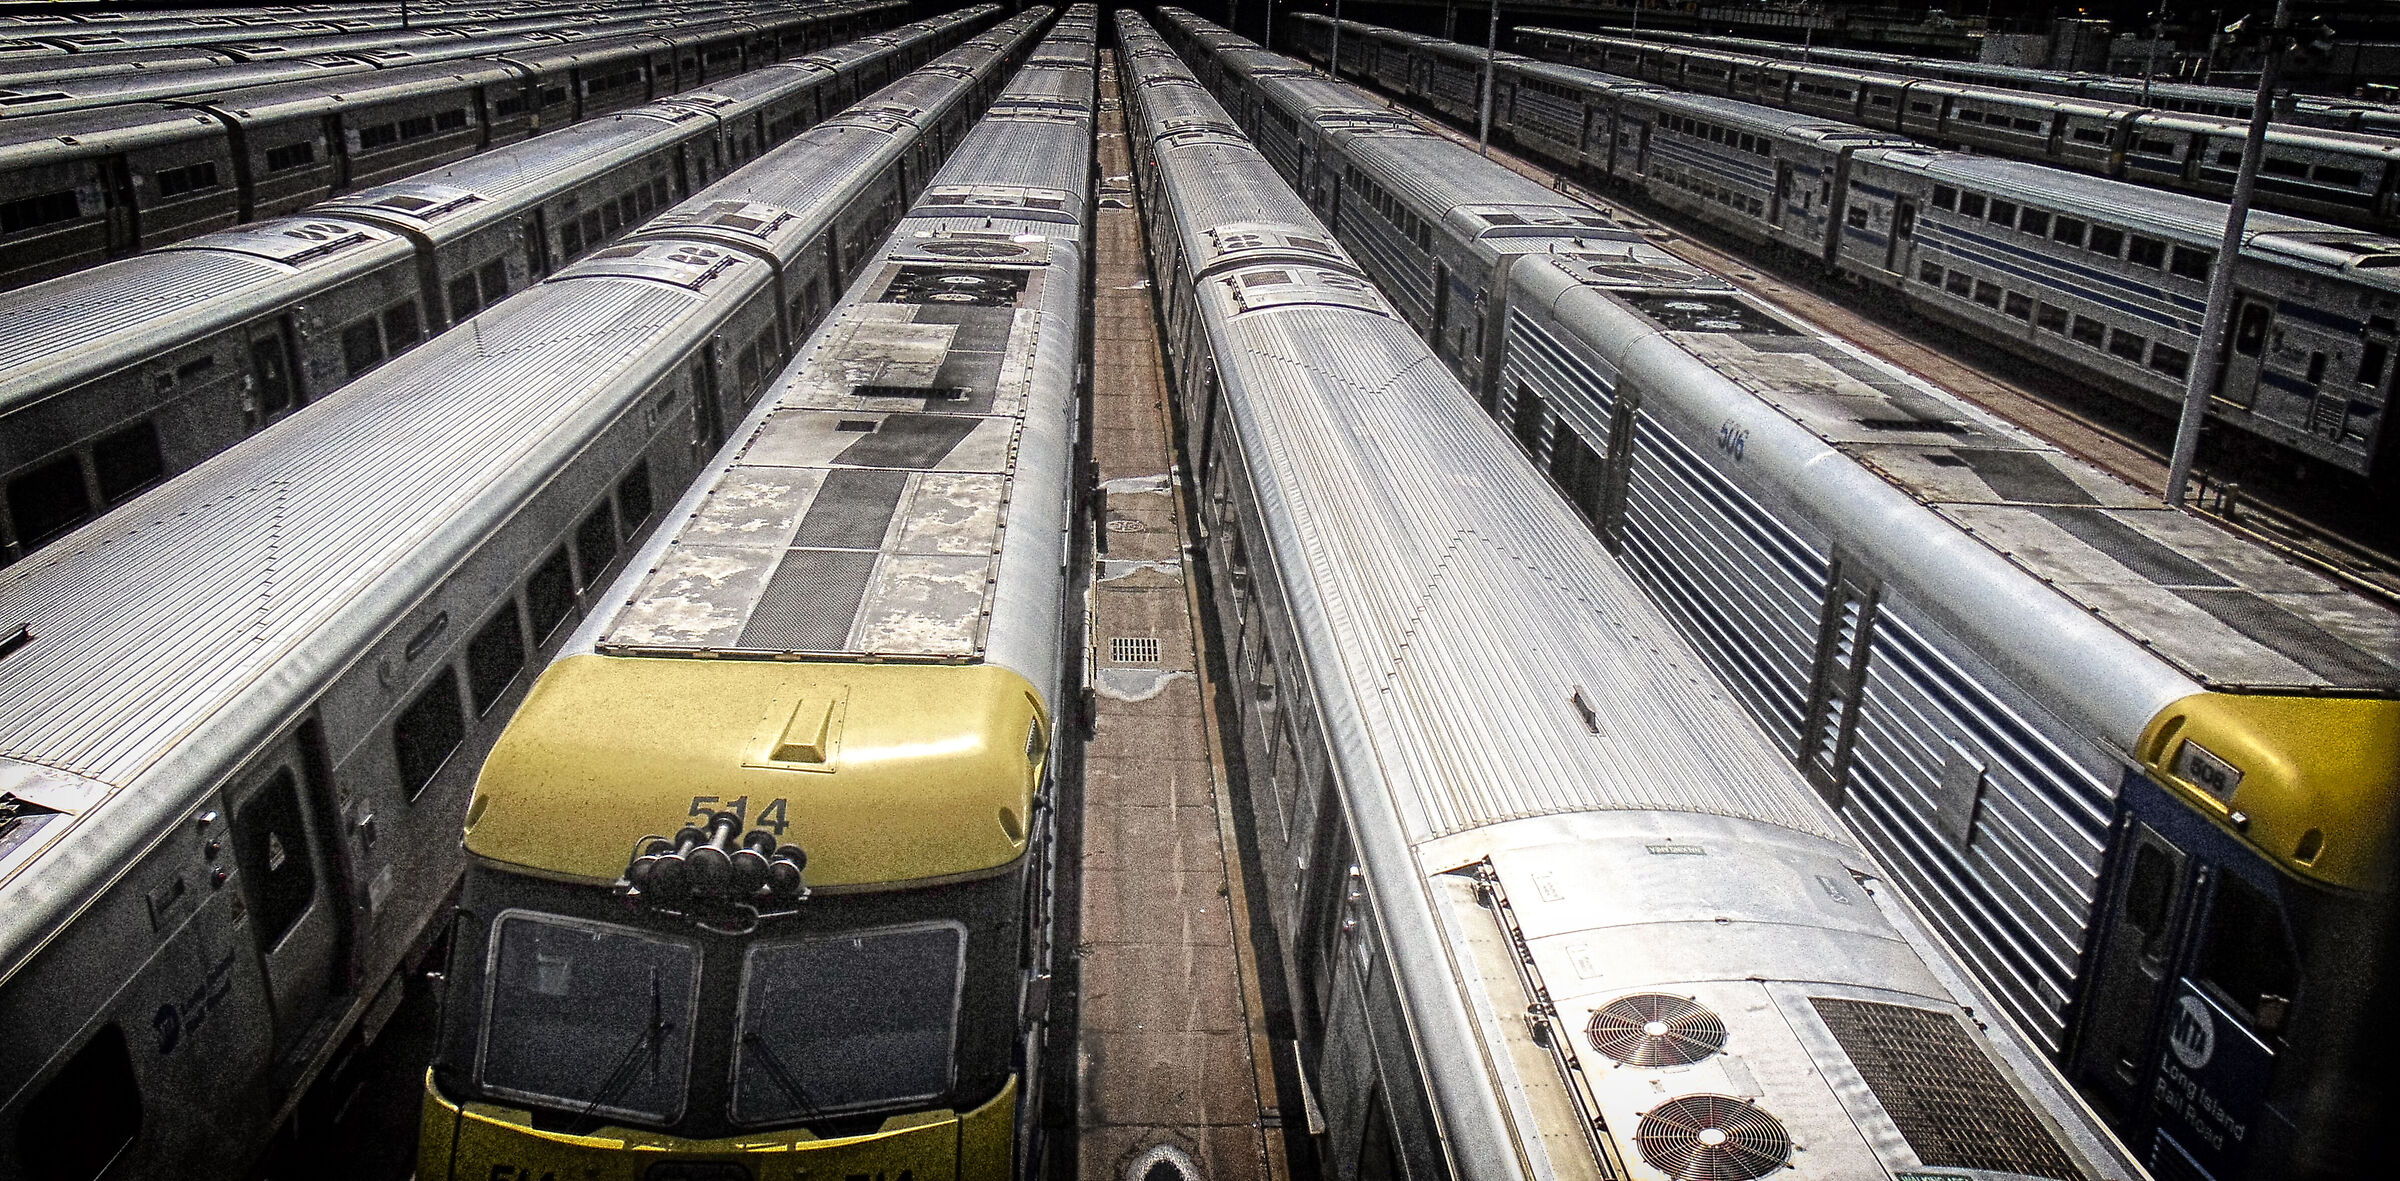 NY - Trains at rest...